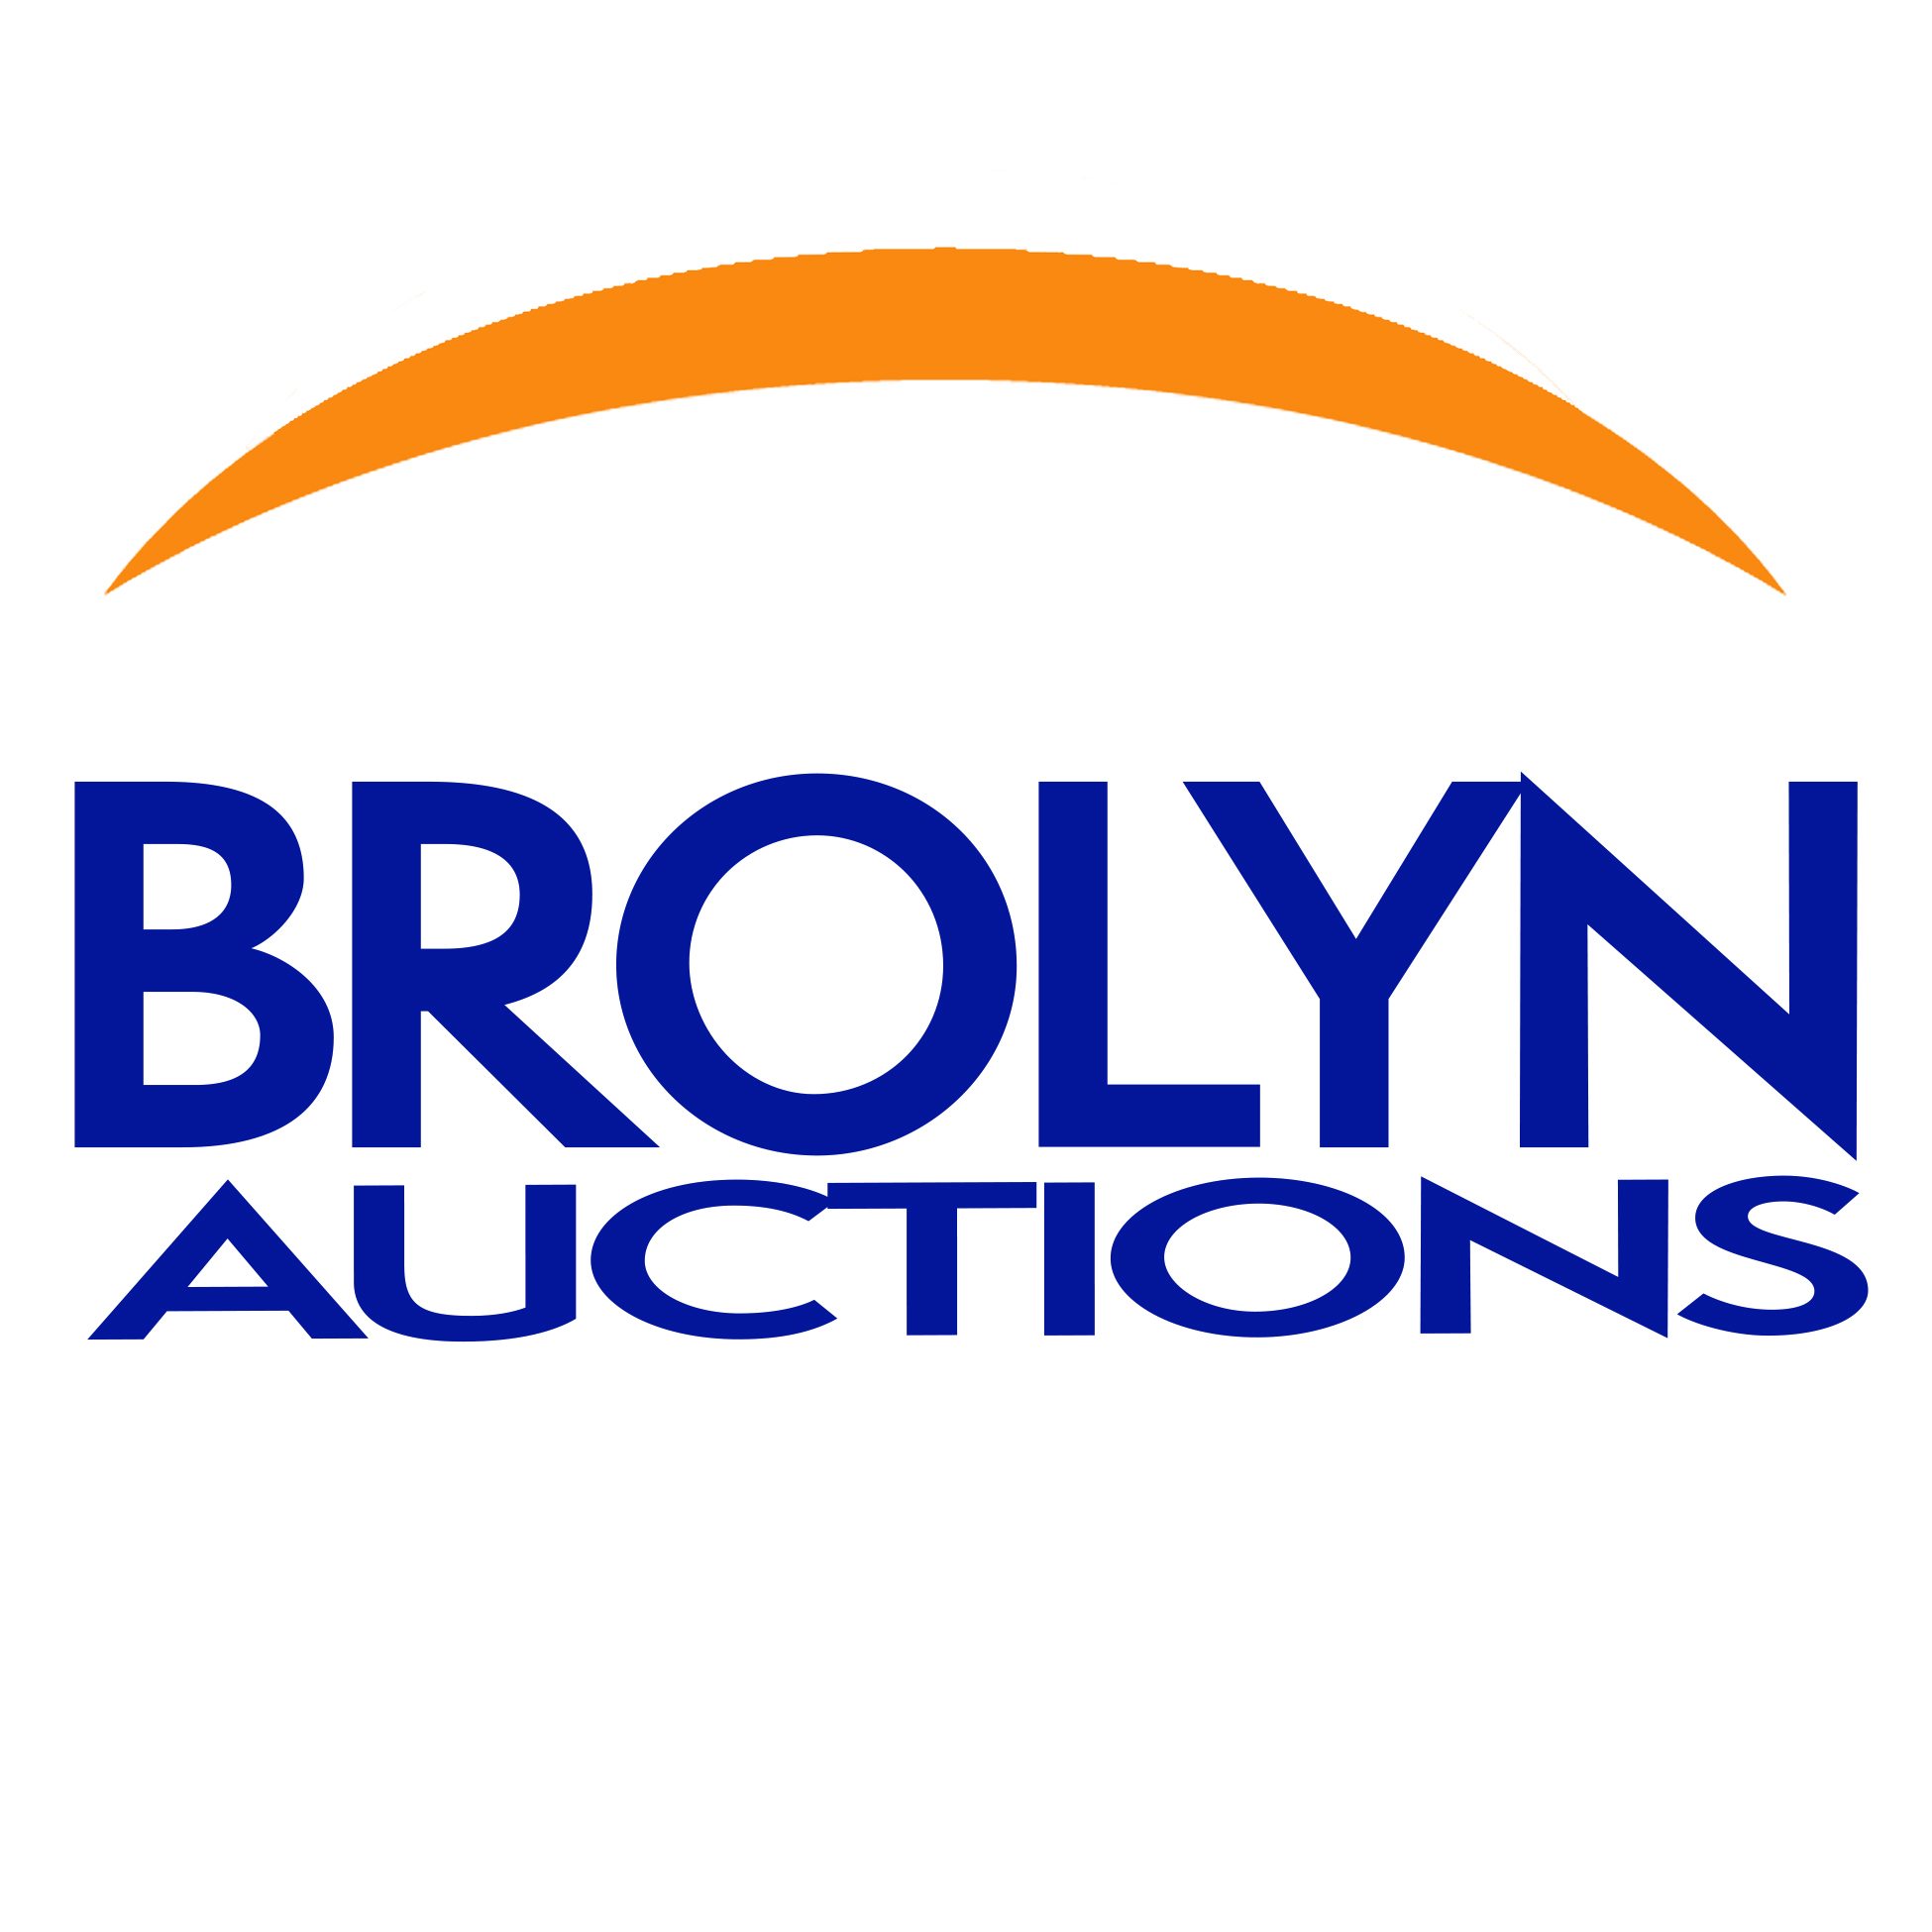 Brolyn Auctions LLC